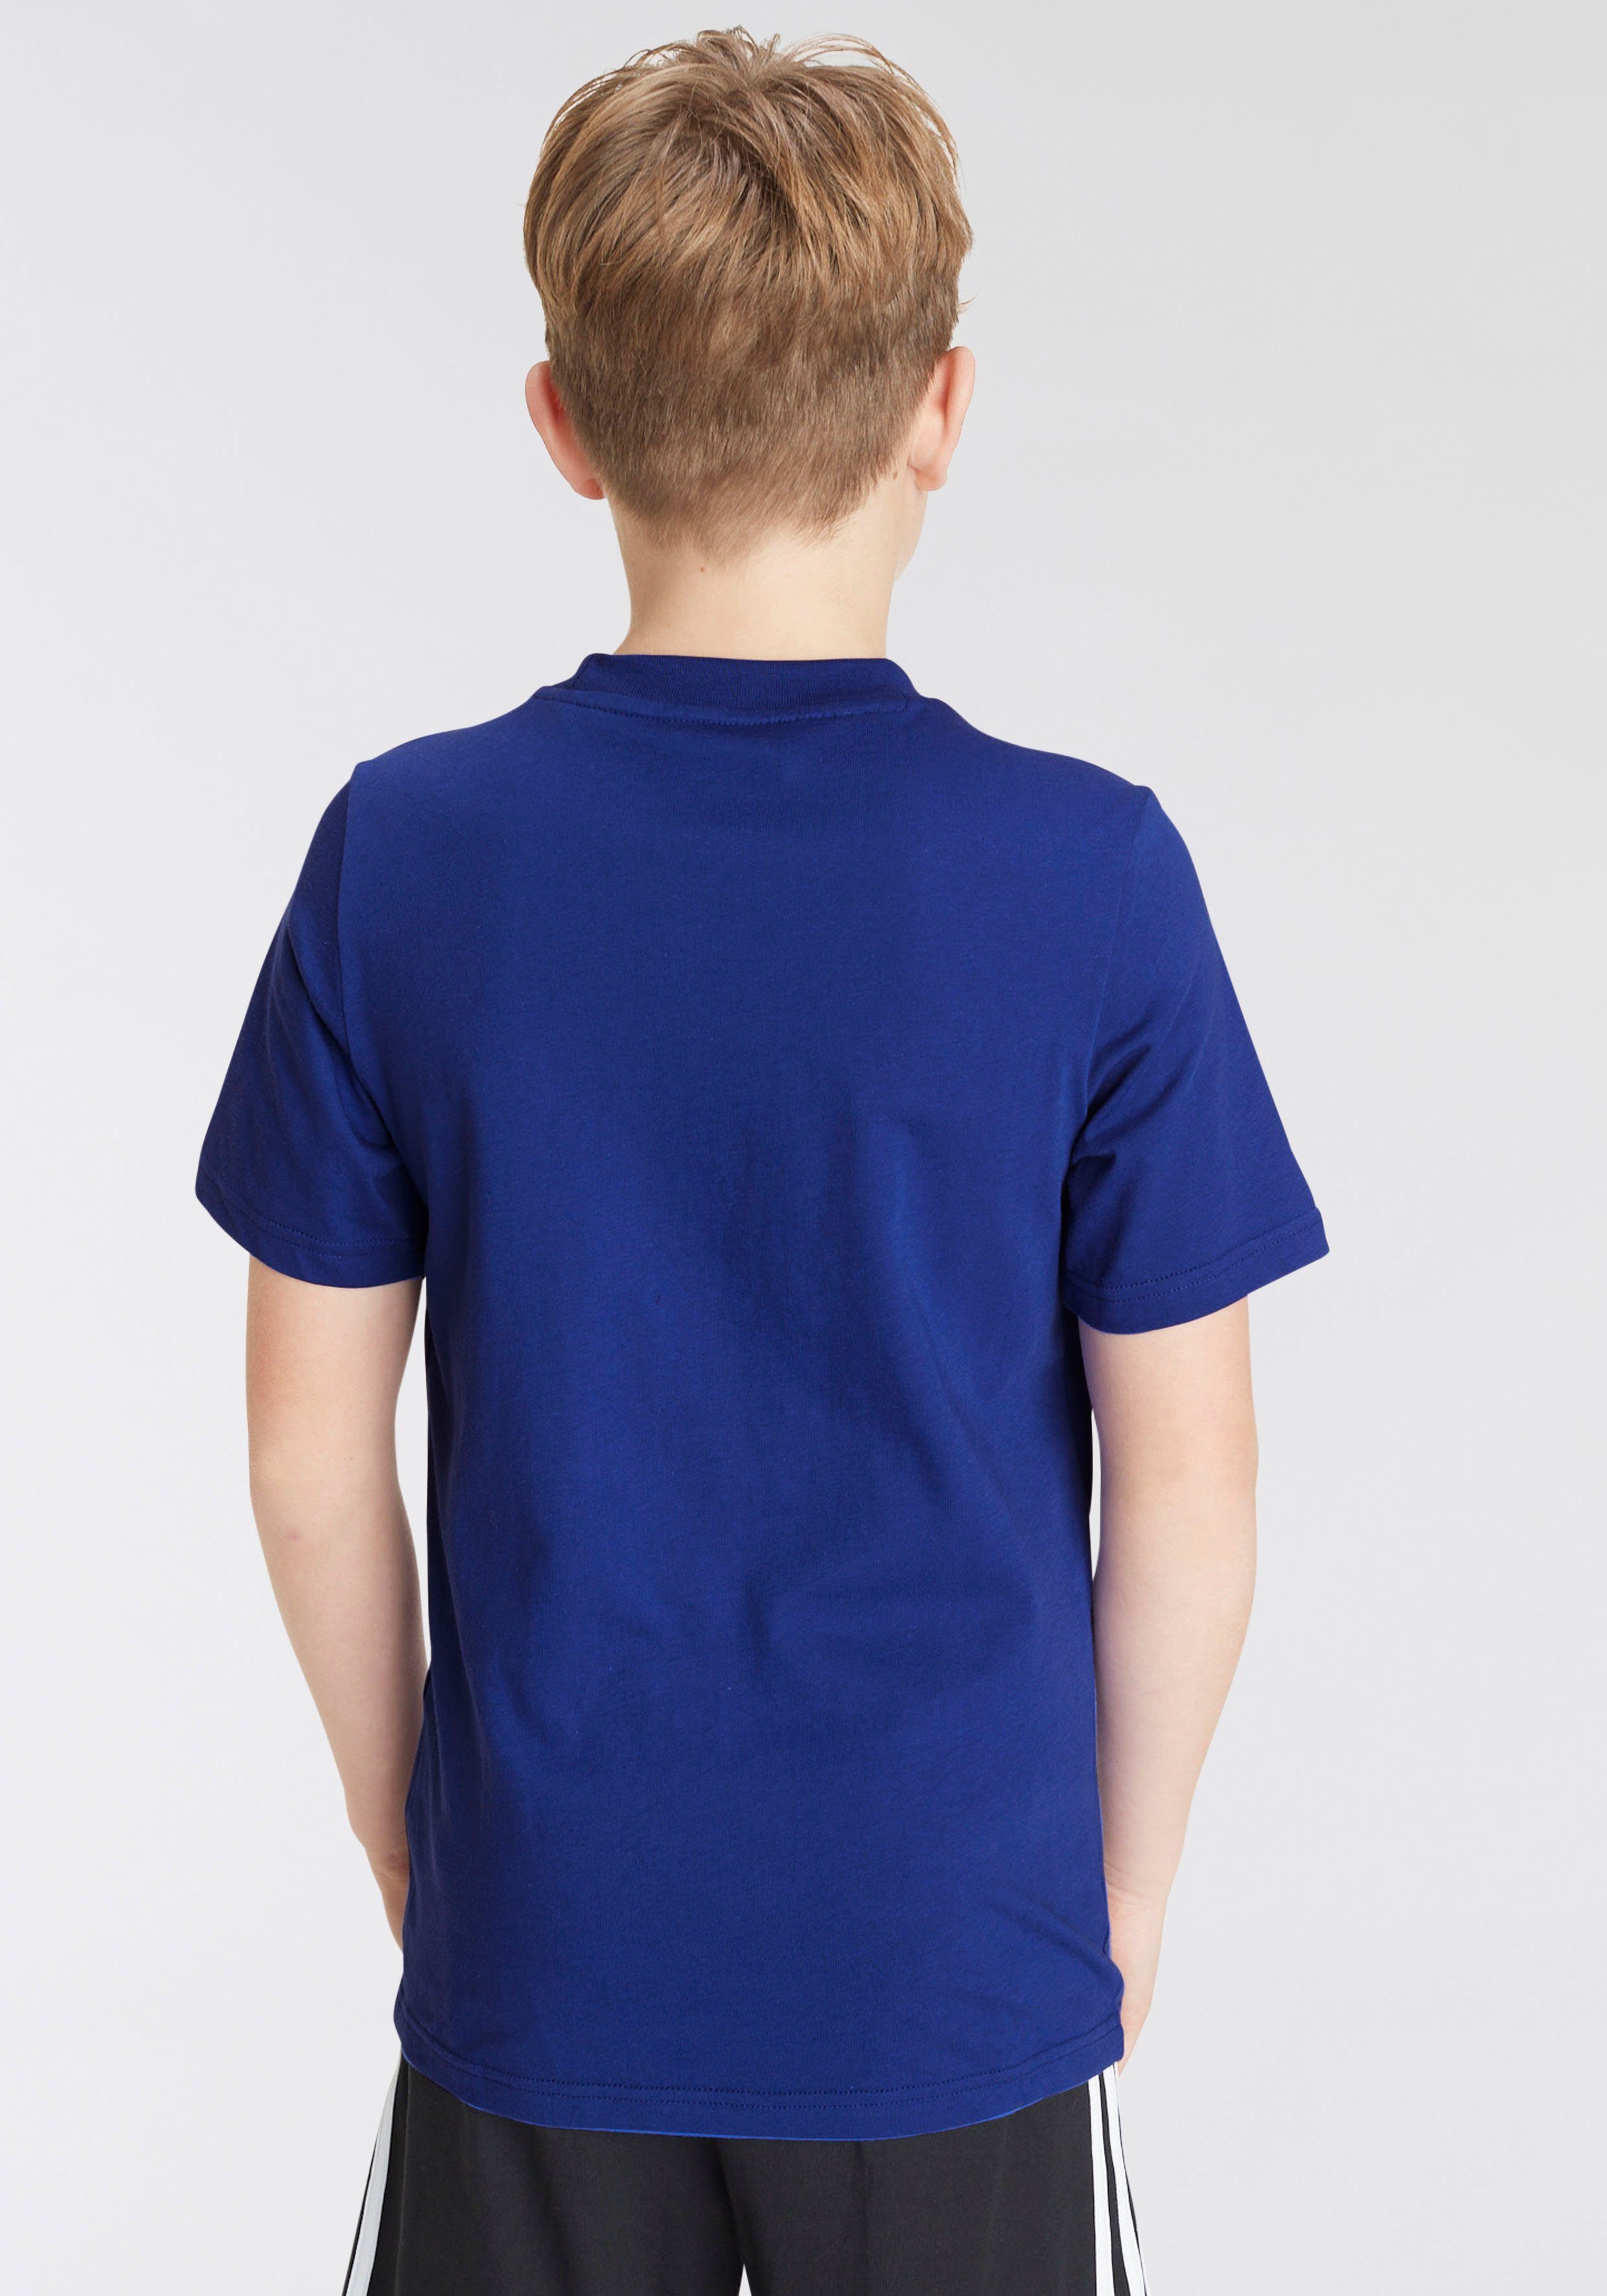 LOGO / COTTON White Semi T-Shirt Blue Sportswear ESSENTIALS SMALL Lucid adidas